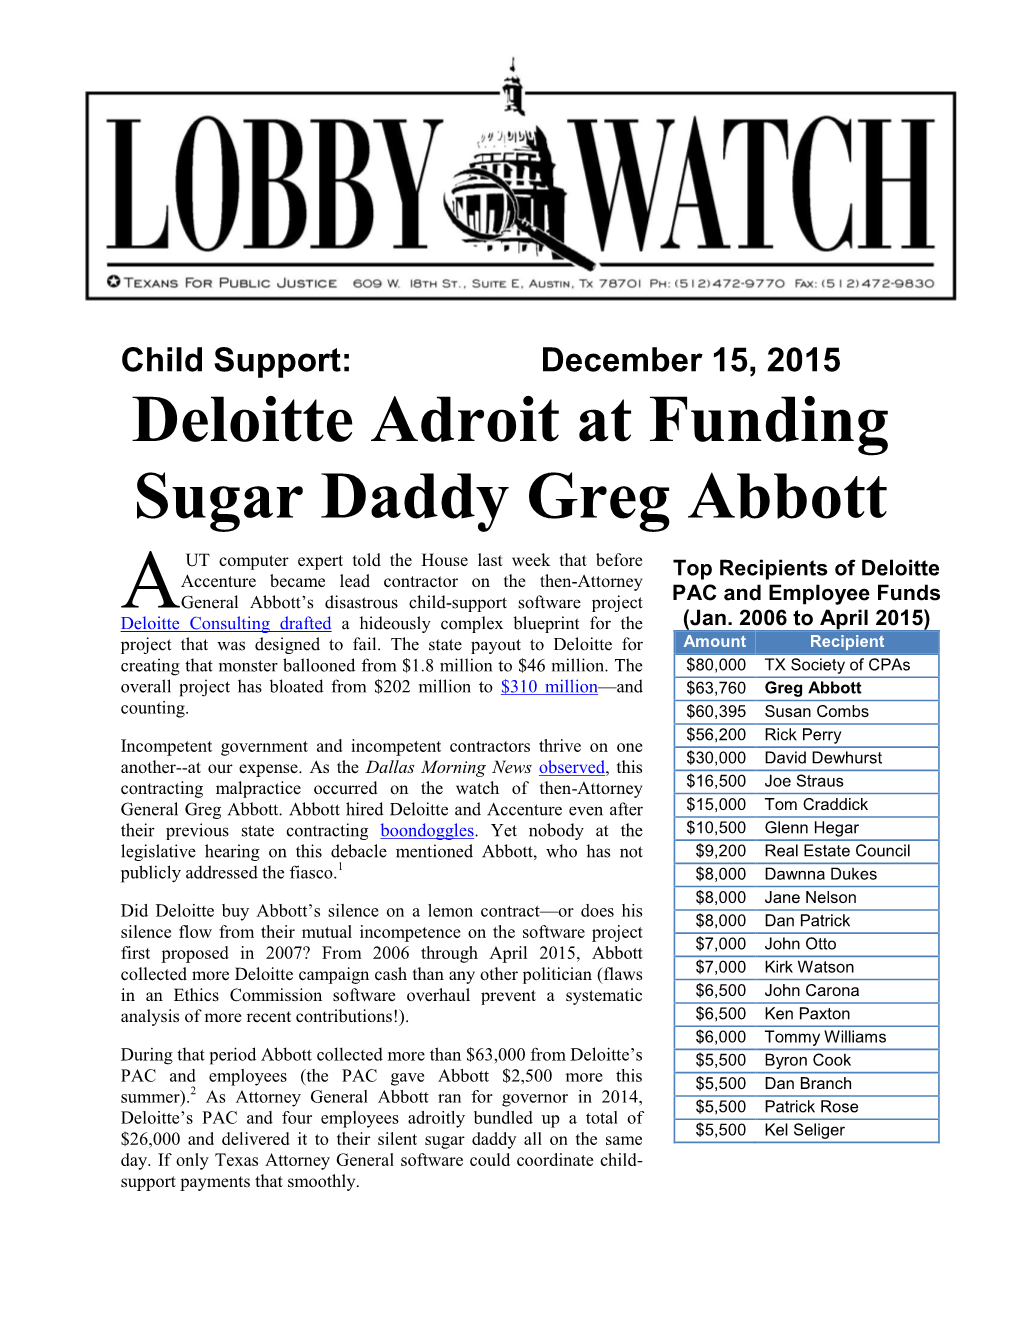 Deloitte Adroit at Funding Sugar Daddy Greg Abbott